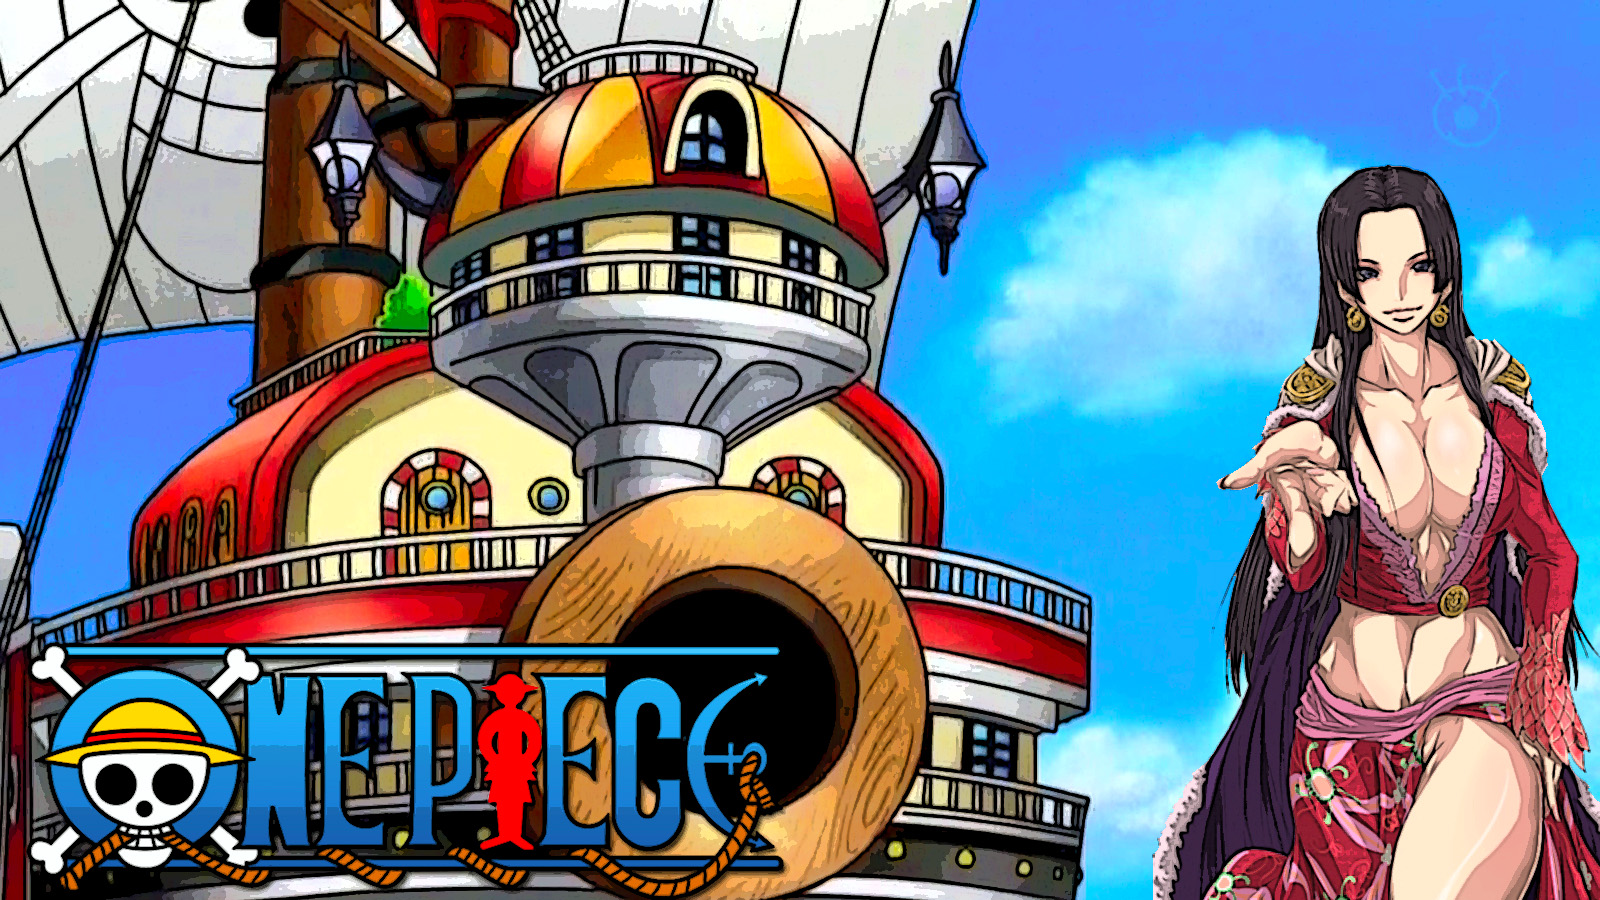 One Piece Boa Hancock